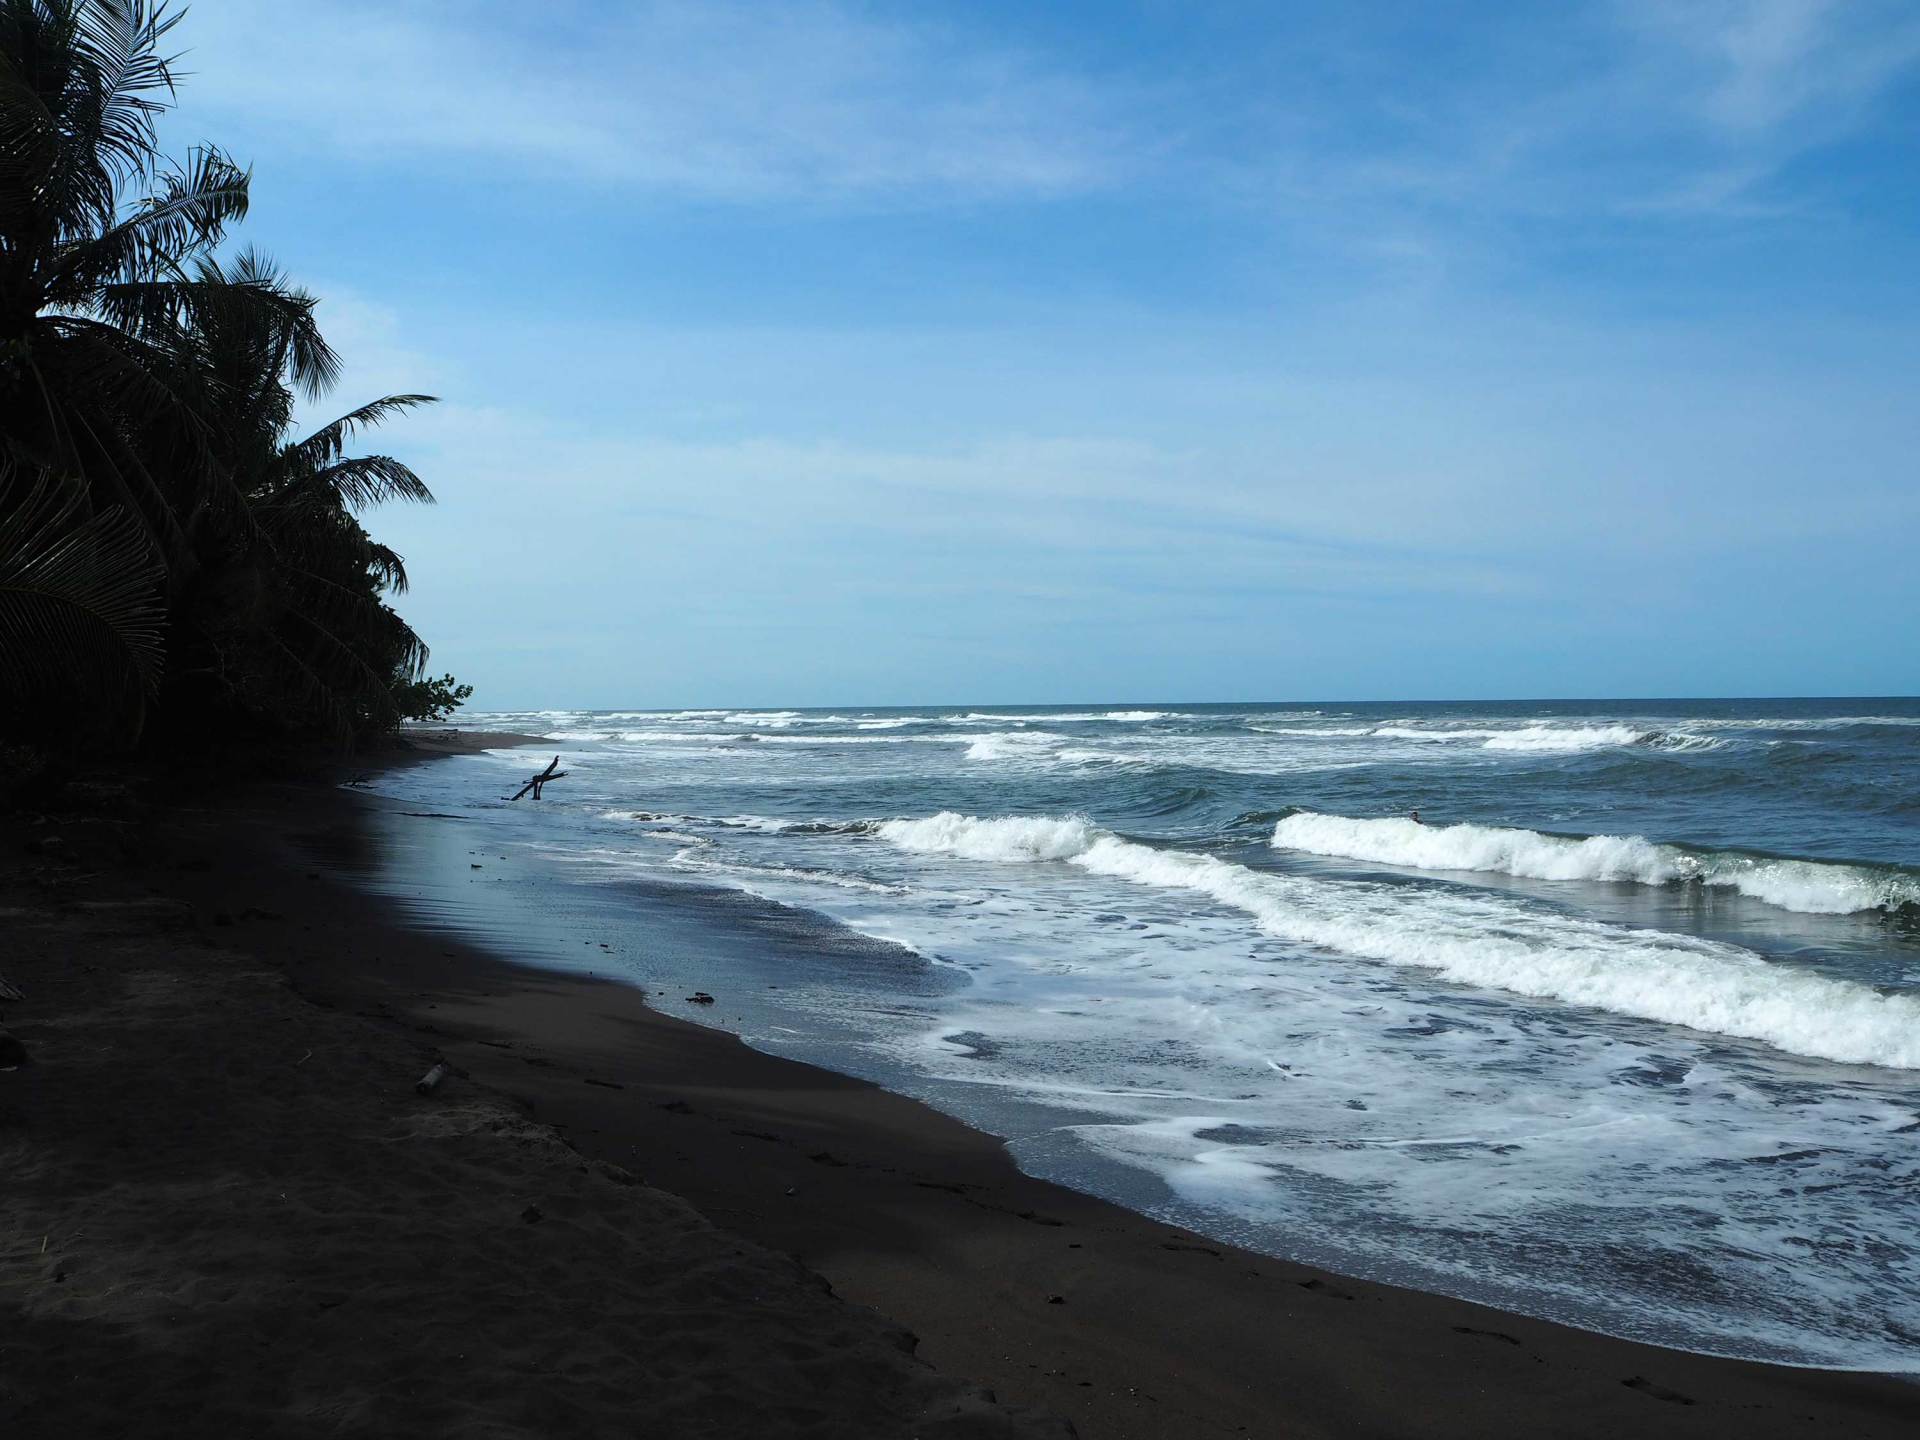 The main beach at Tortuguero National Park, Costa Rica